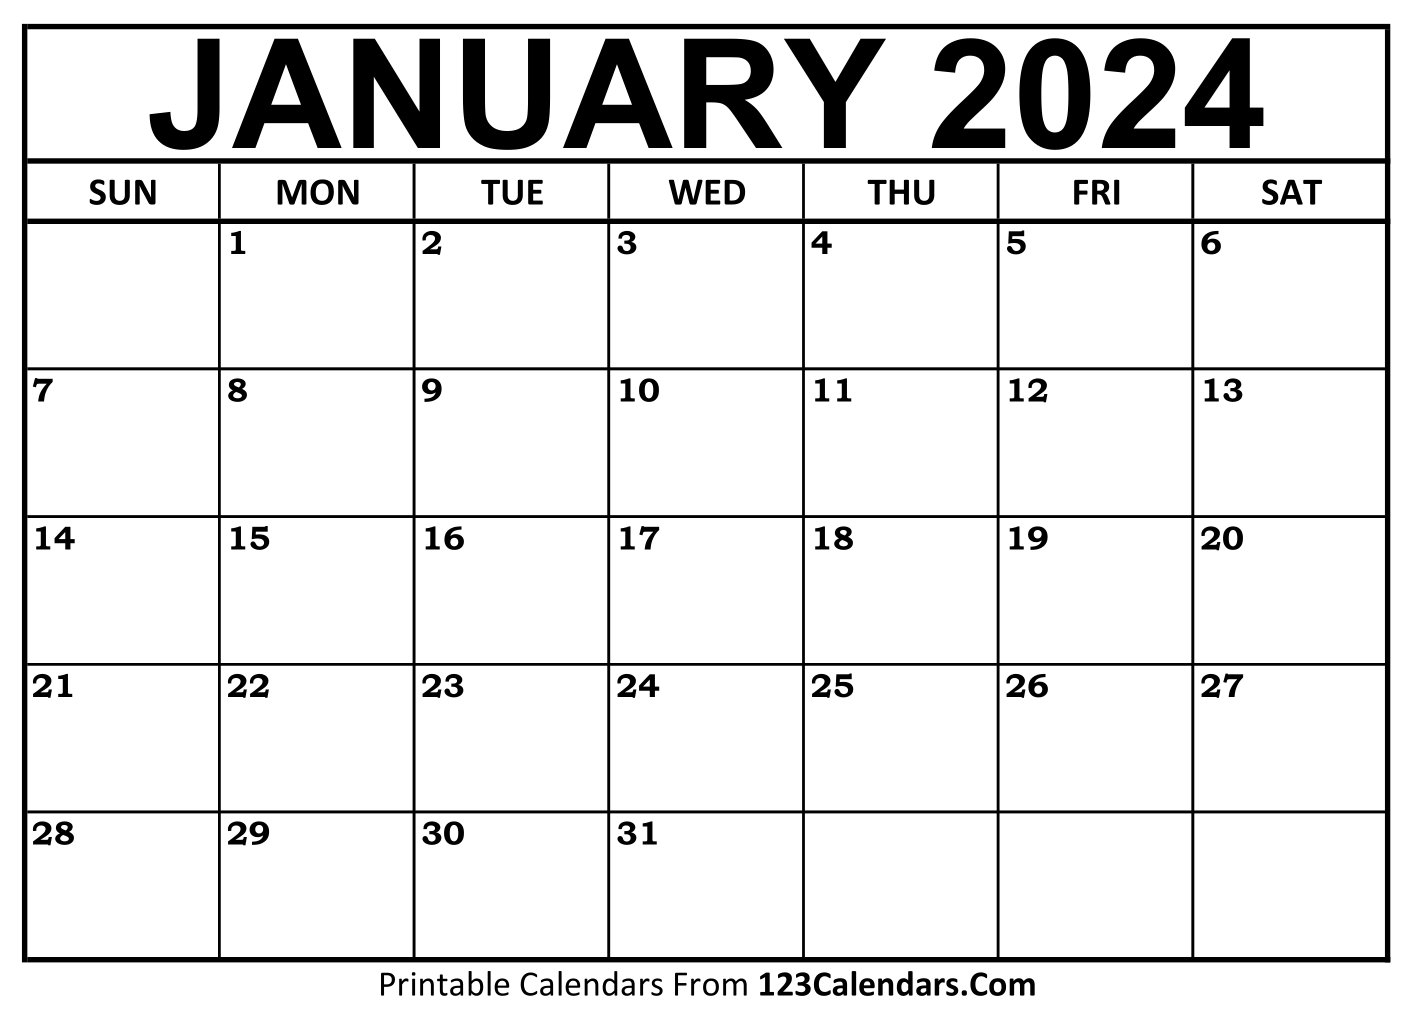 Printable January 2024 Calendar Templates - 123Calendars for Calendar For January 2024 Printable